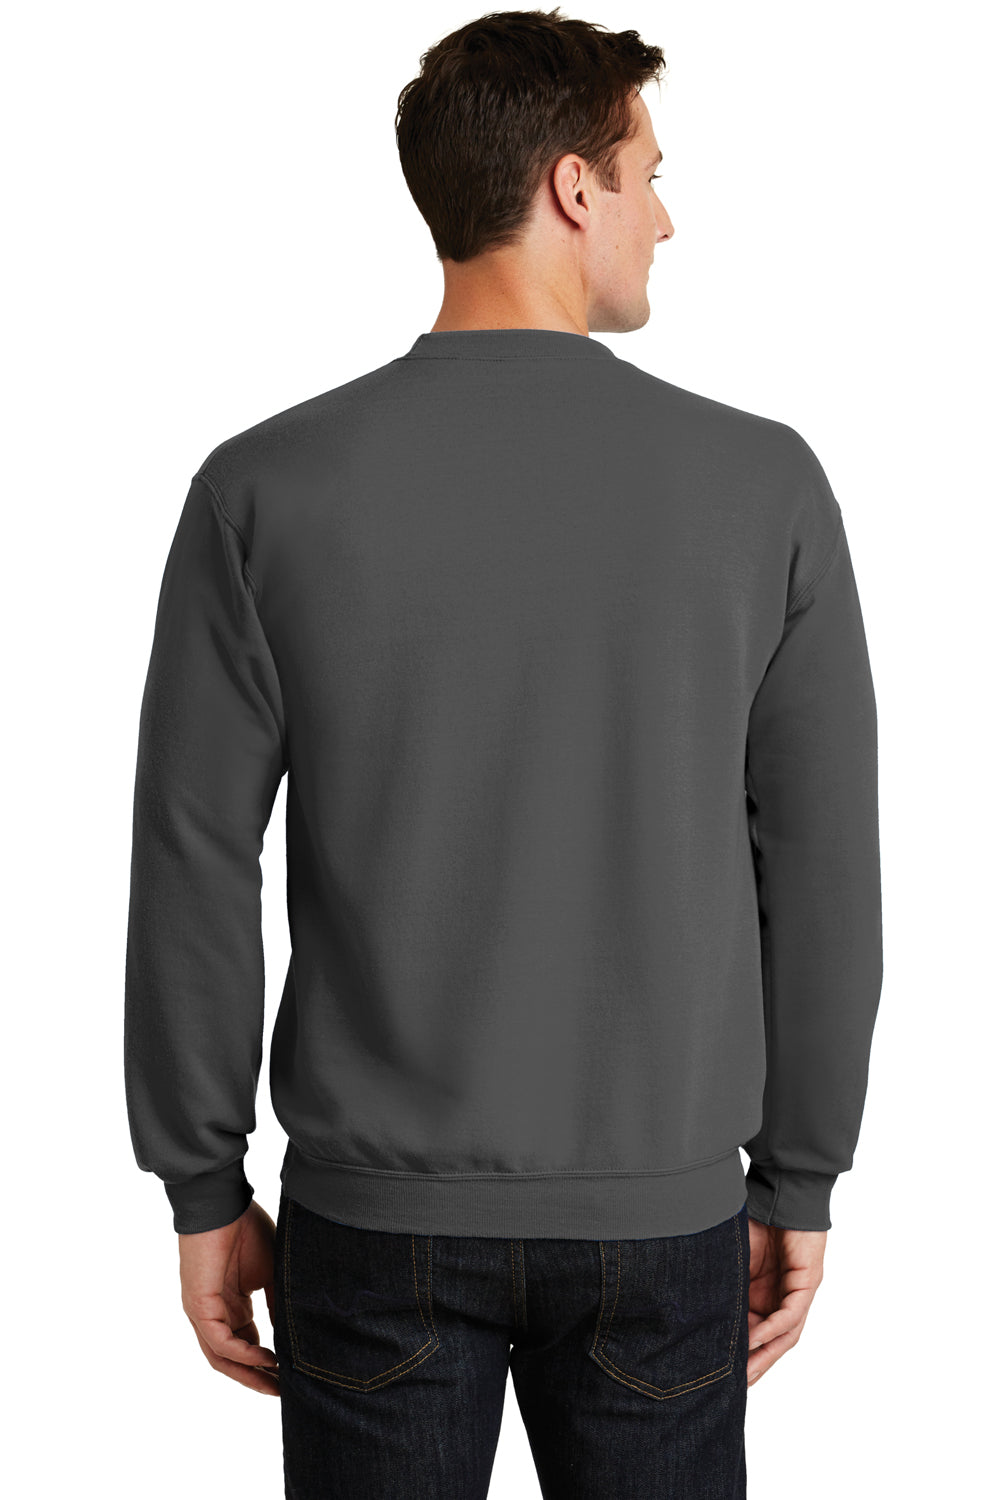 Port & Company PC78 Mens Core Fleece Crewneck Sweatshirt Charcoal Grey Back